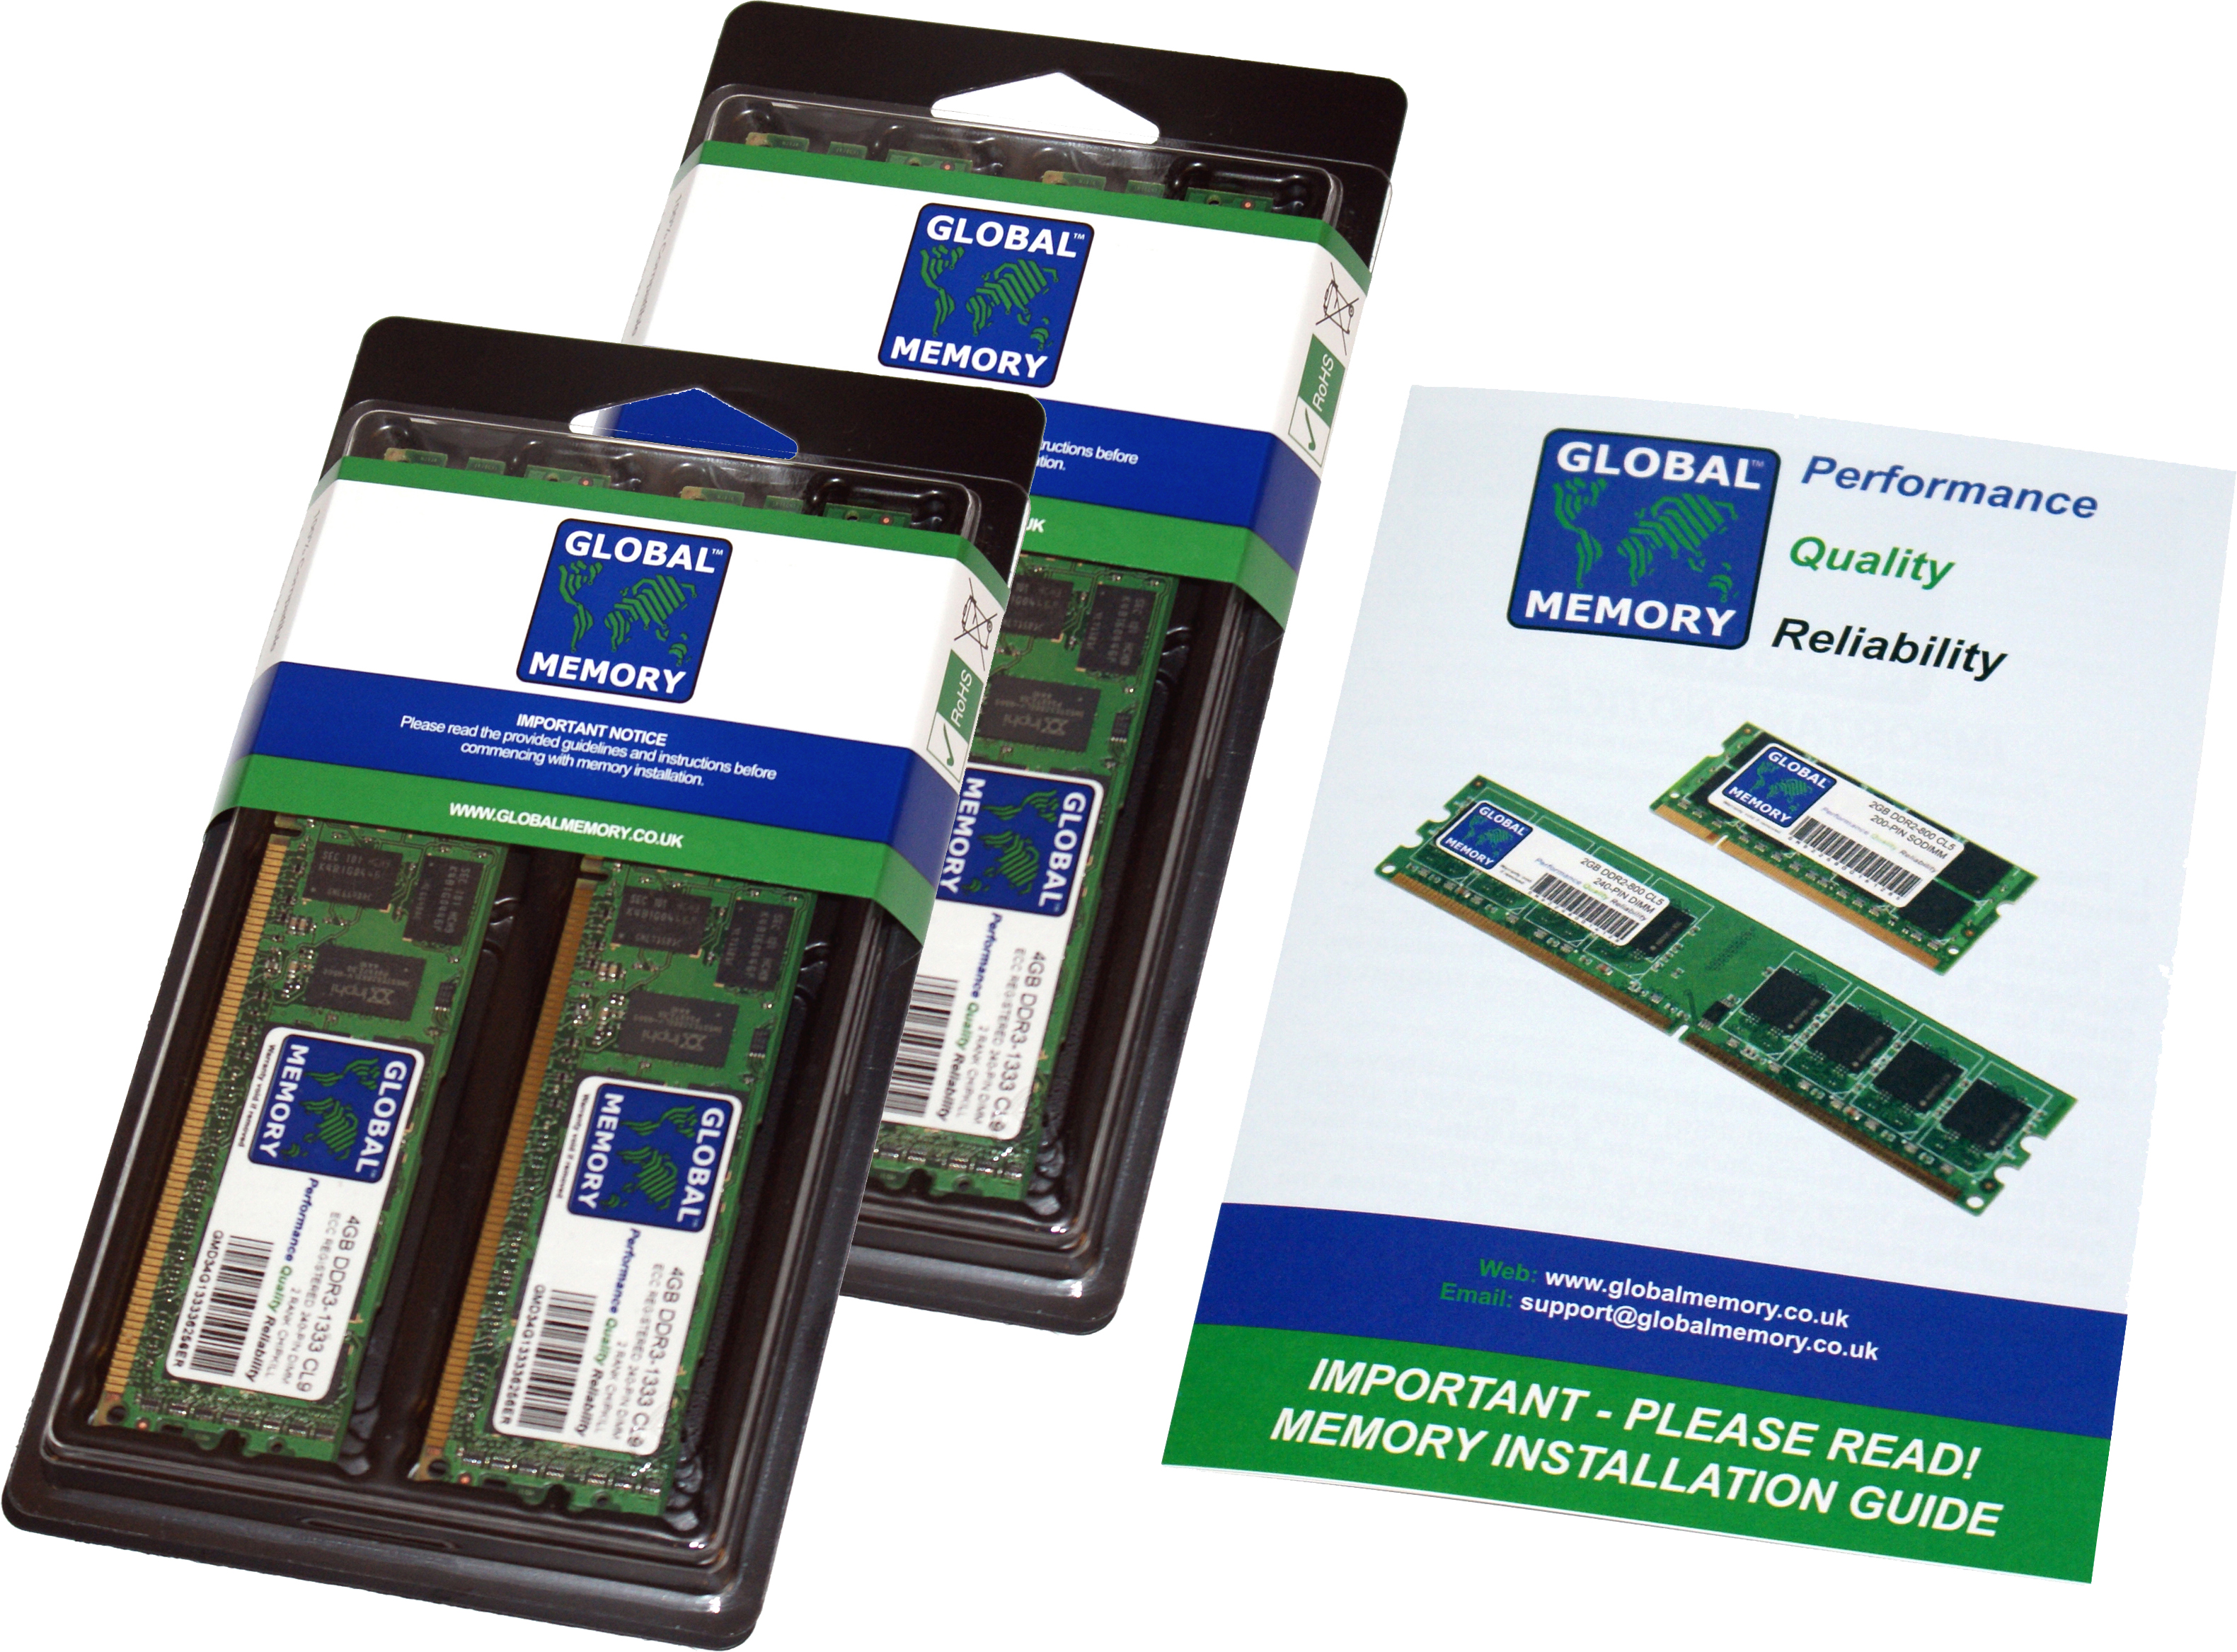 64GB (2 x 32GB) DDR4 2400MHz PC4-19200 288-PIN ECC REGISTERED DIMM (RDIMM) MEMORY RAM KIT FOR SUN SERVERS/WORKSTATIONS (4 RANK KIT CHIPKILL)